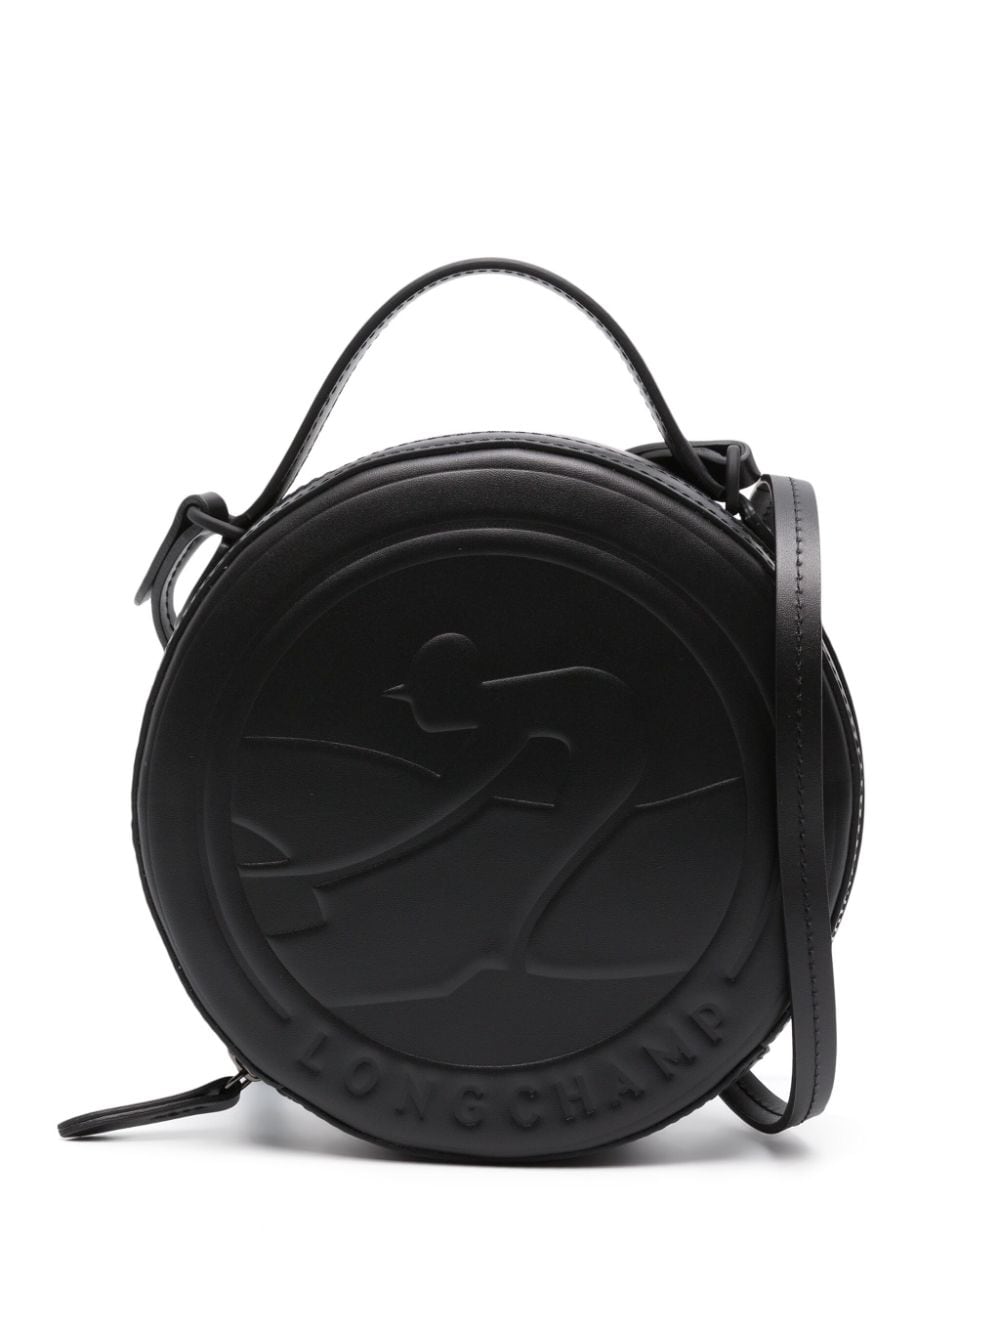 Longchamp mini Box-Trot leather crossbody bag - WARDROB